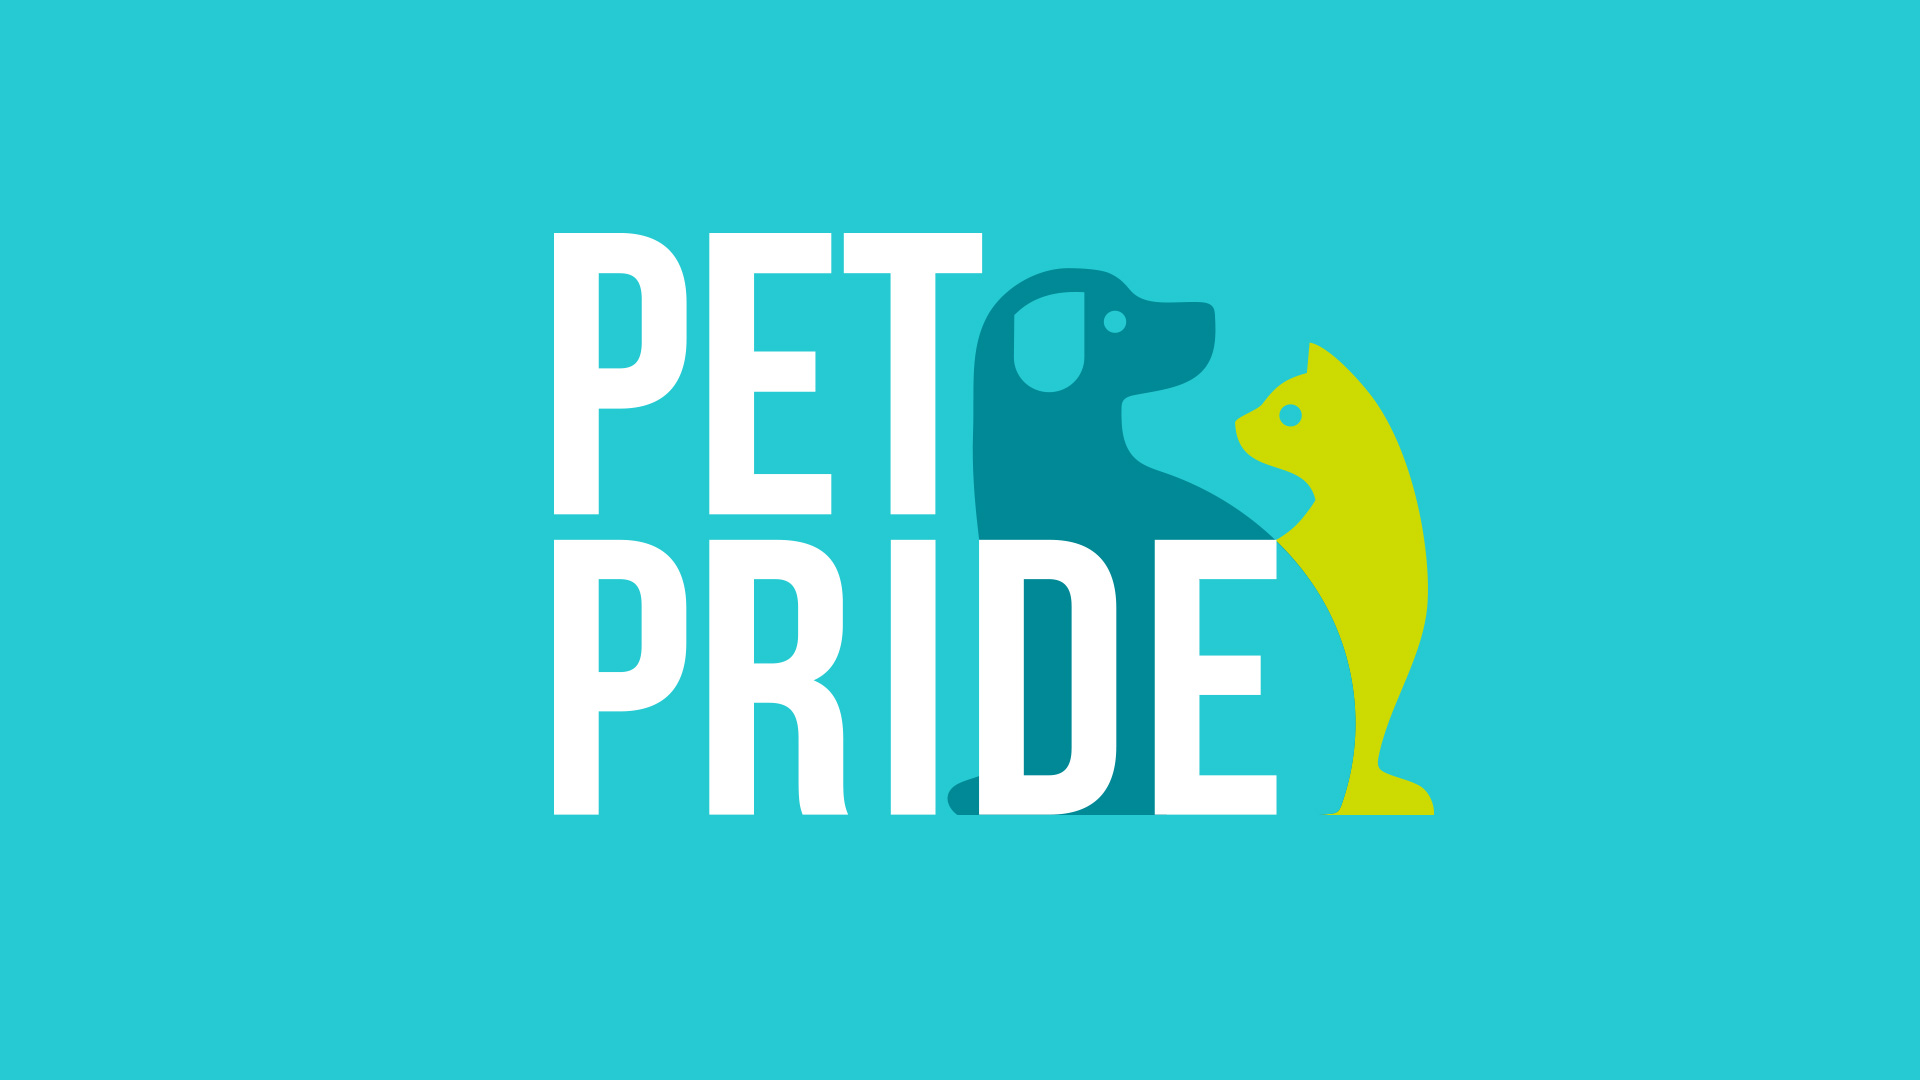 Pet pride для собак. Pet Pride. Pet Pride корм хорошее качество?. Pet Pride отзывы.